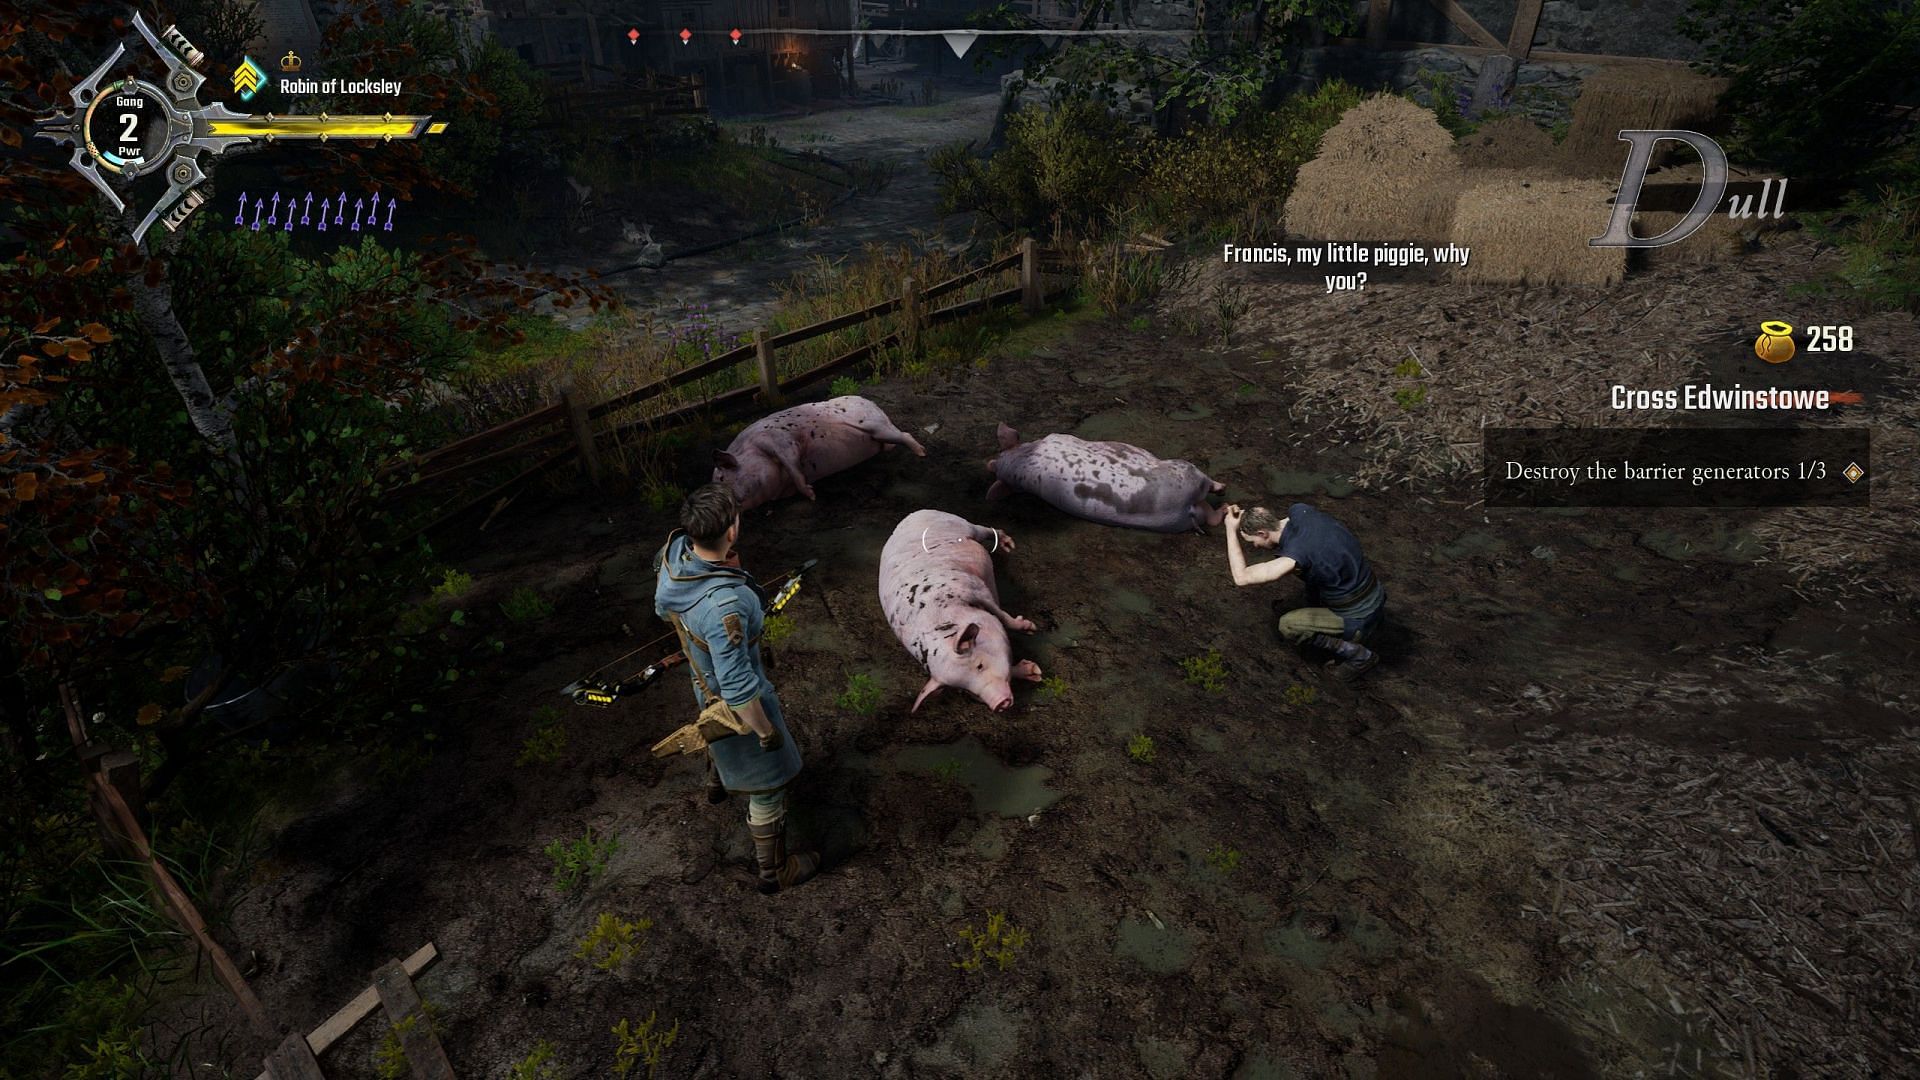 R.I.P. little piggies (Screenshot via Gangs of Sherwood)